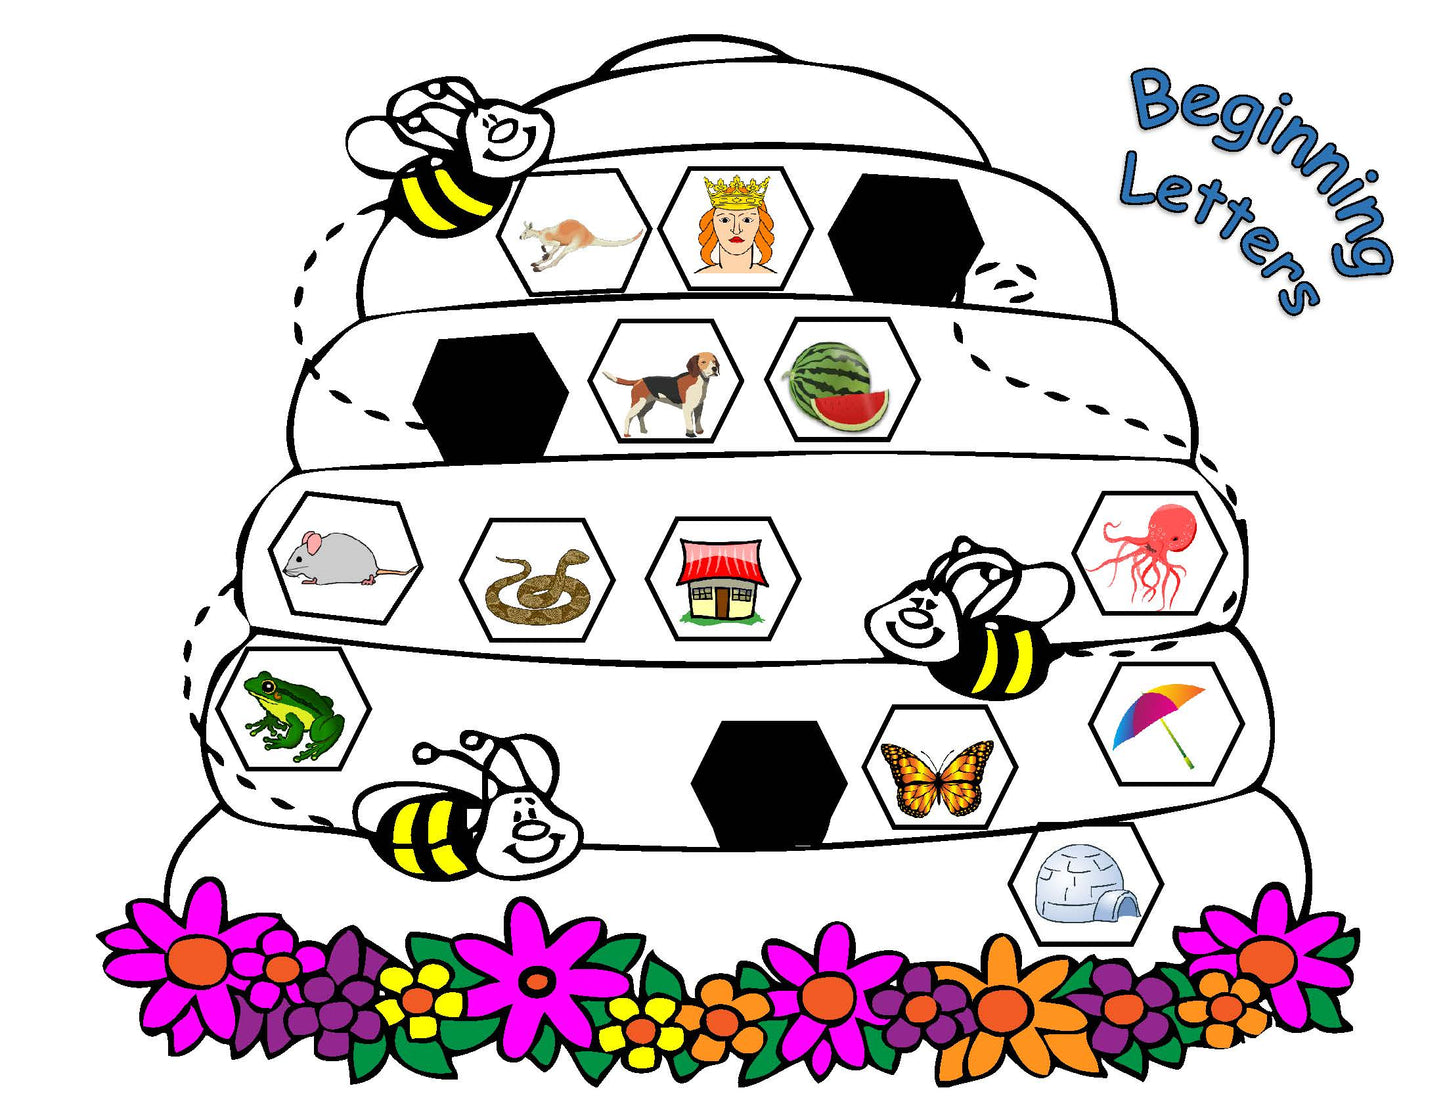 beehive literacy game